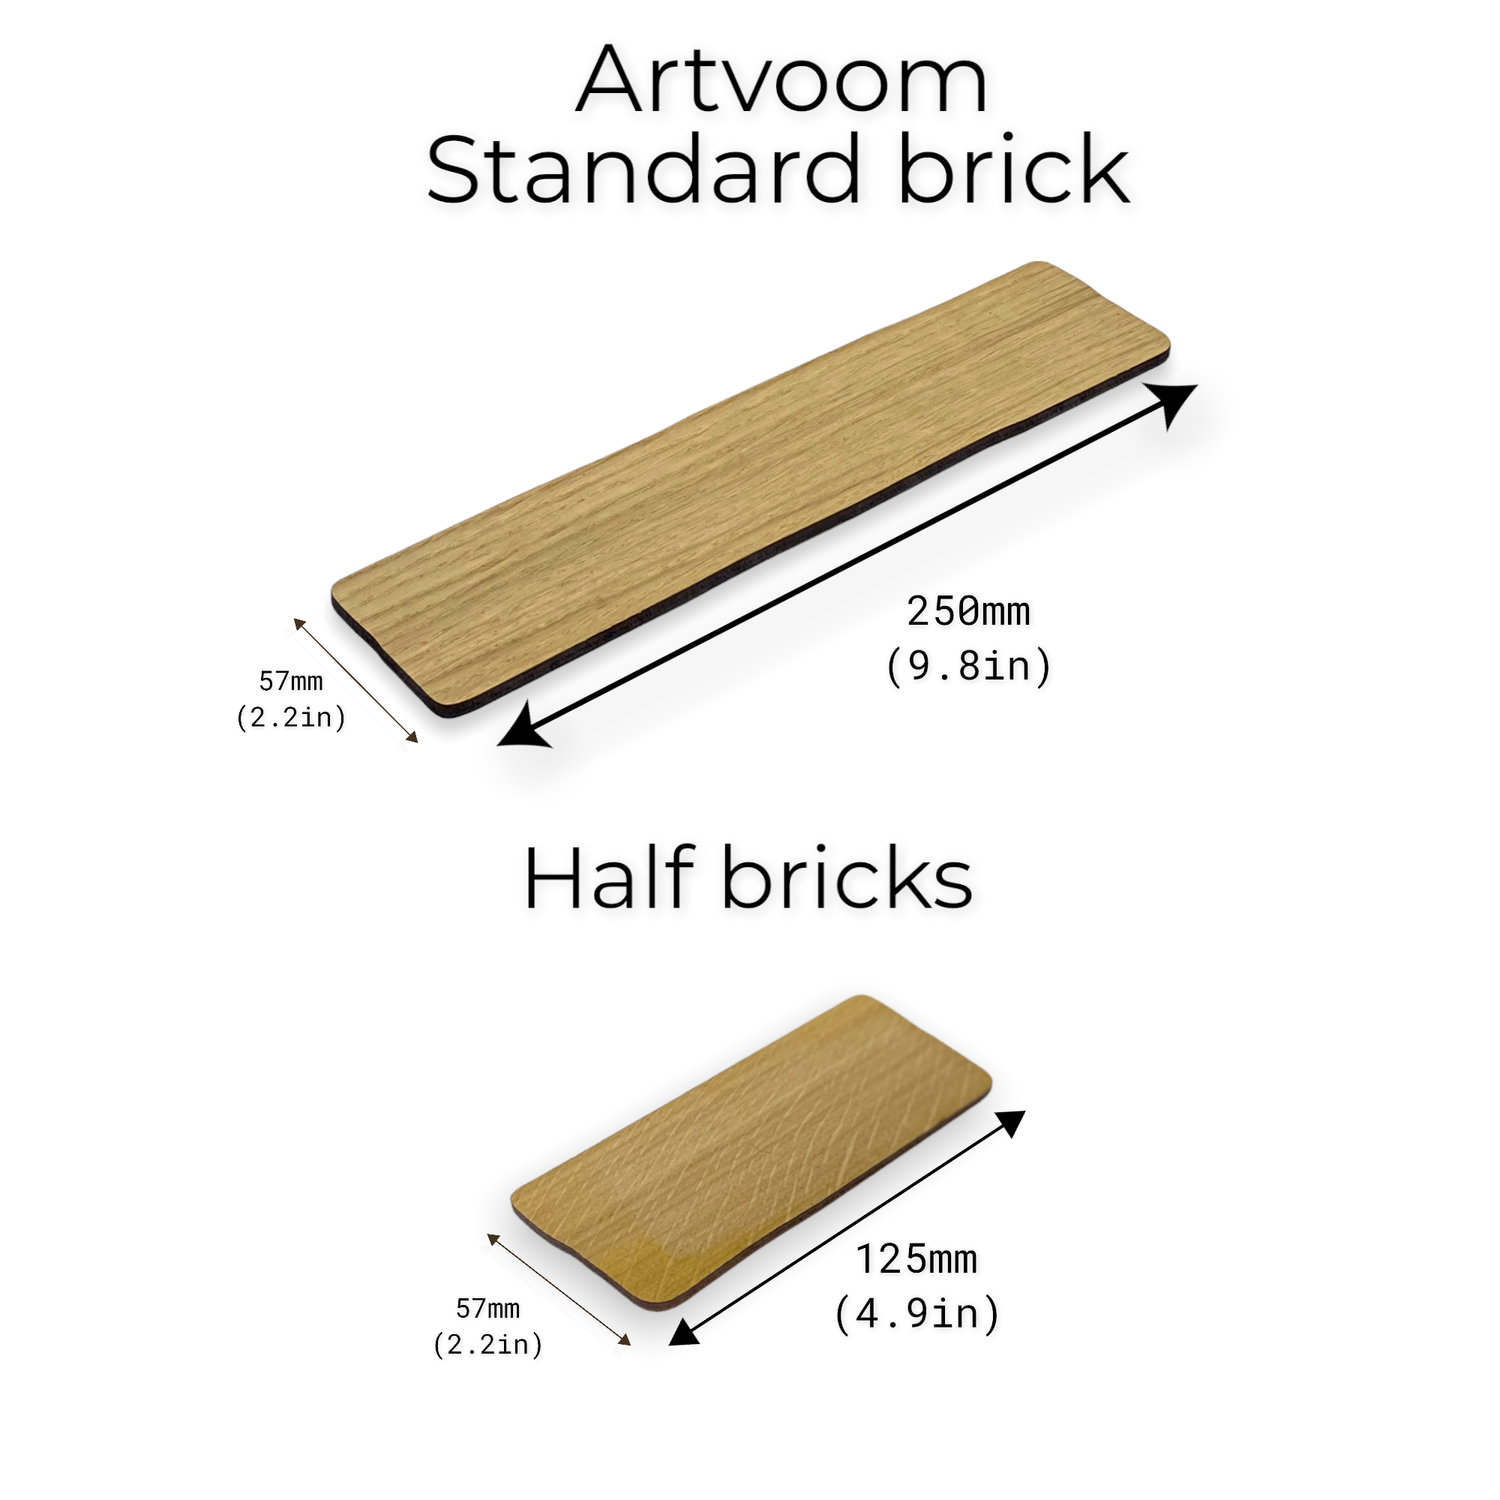 Real Wooden Natural Oak Faux Bricks for Wall Panels, 42 pcs in box. Artvoom Wall Decor - Artvoom